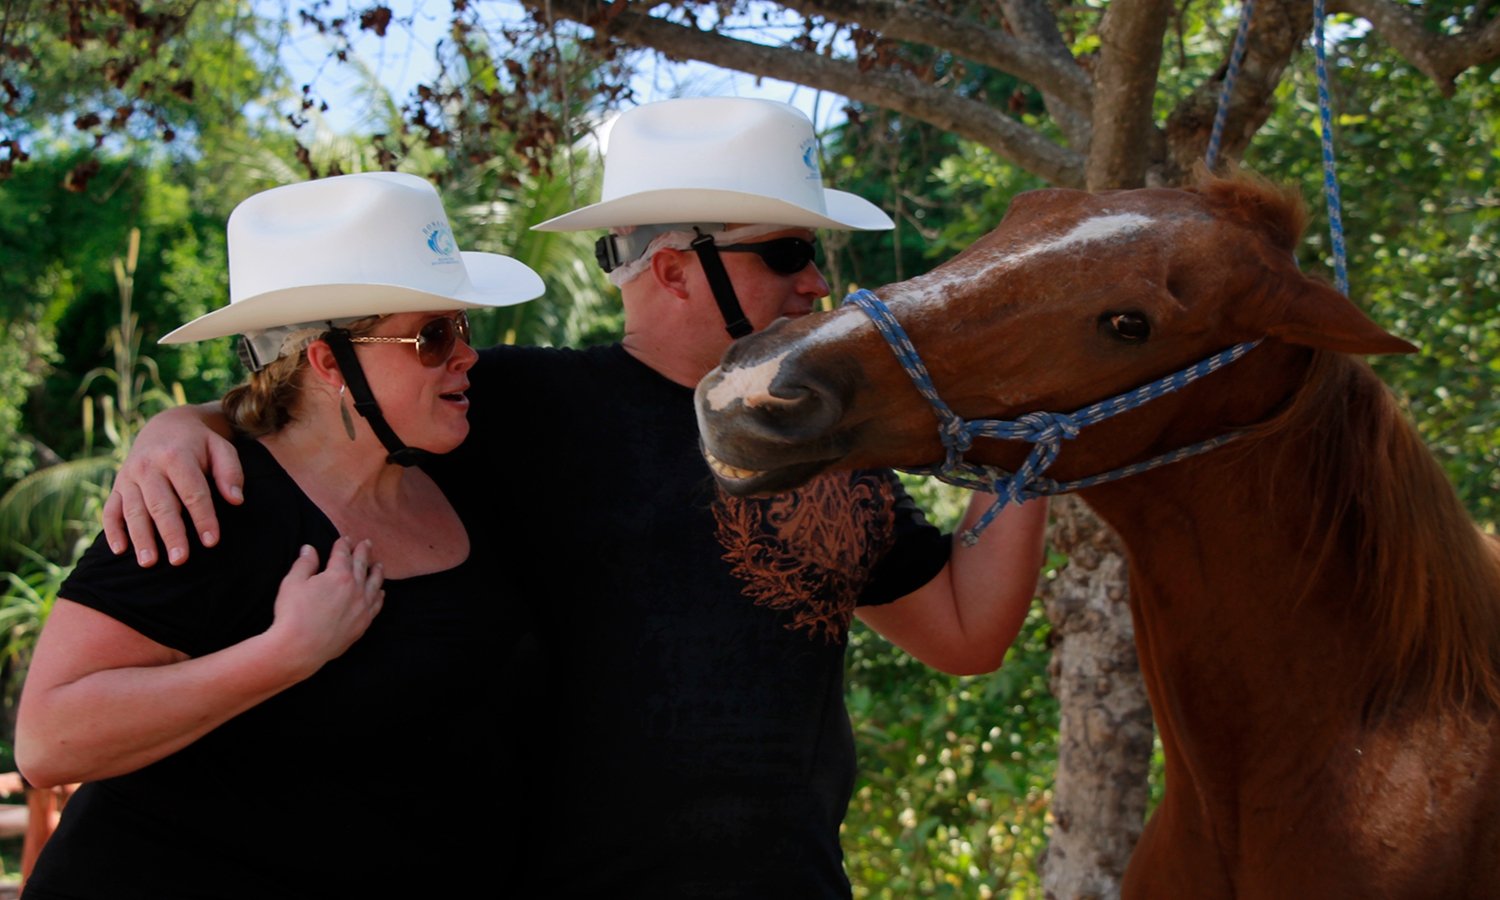 Horseback Riding Tour through the Riviera Maya Jungle